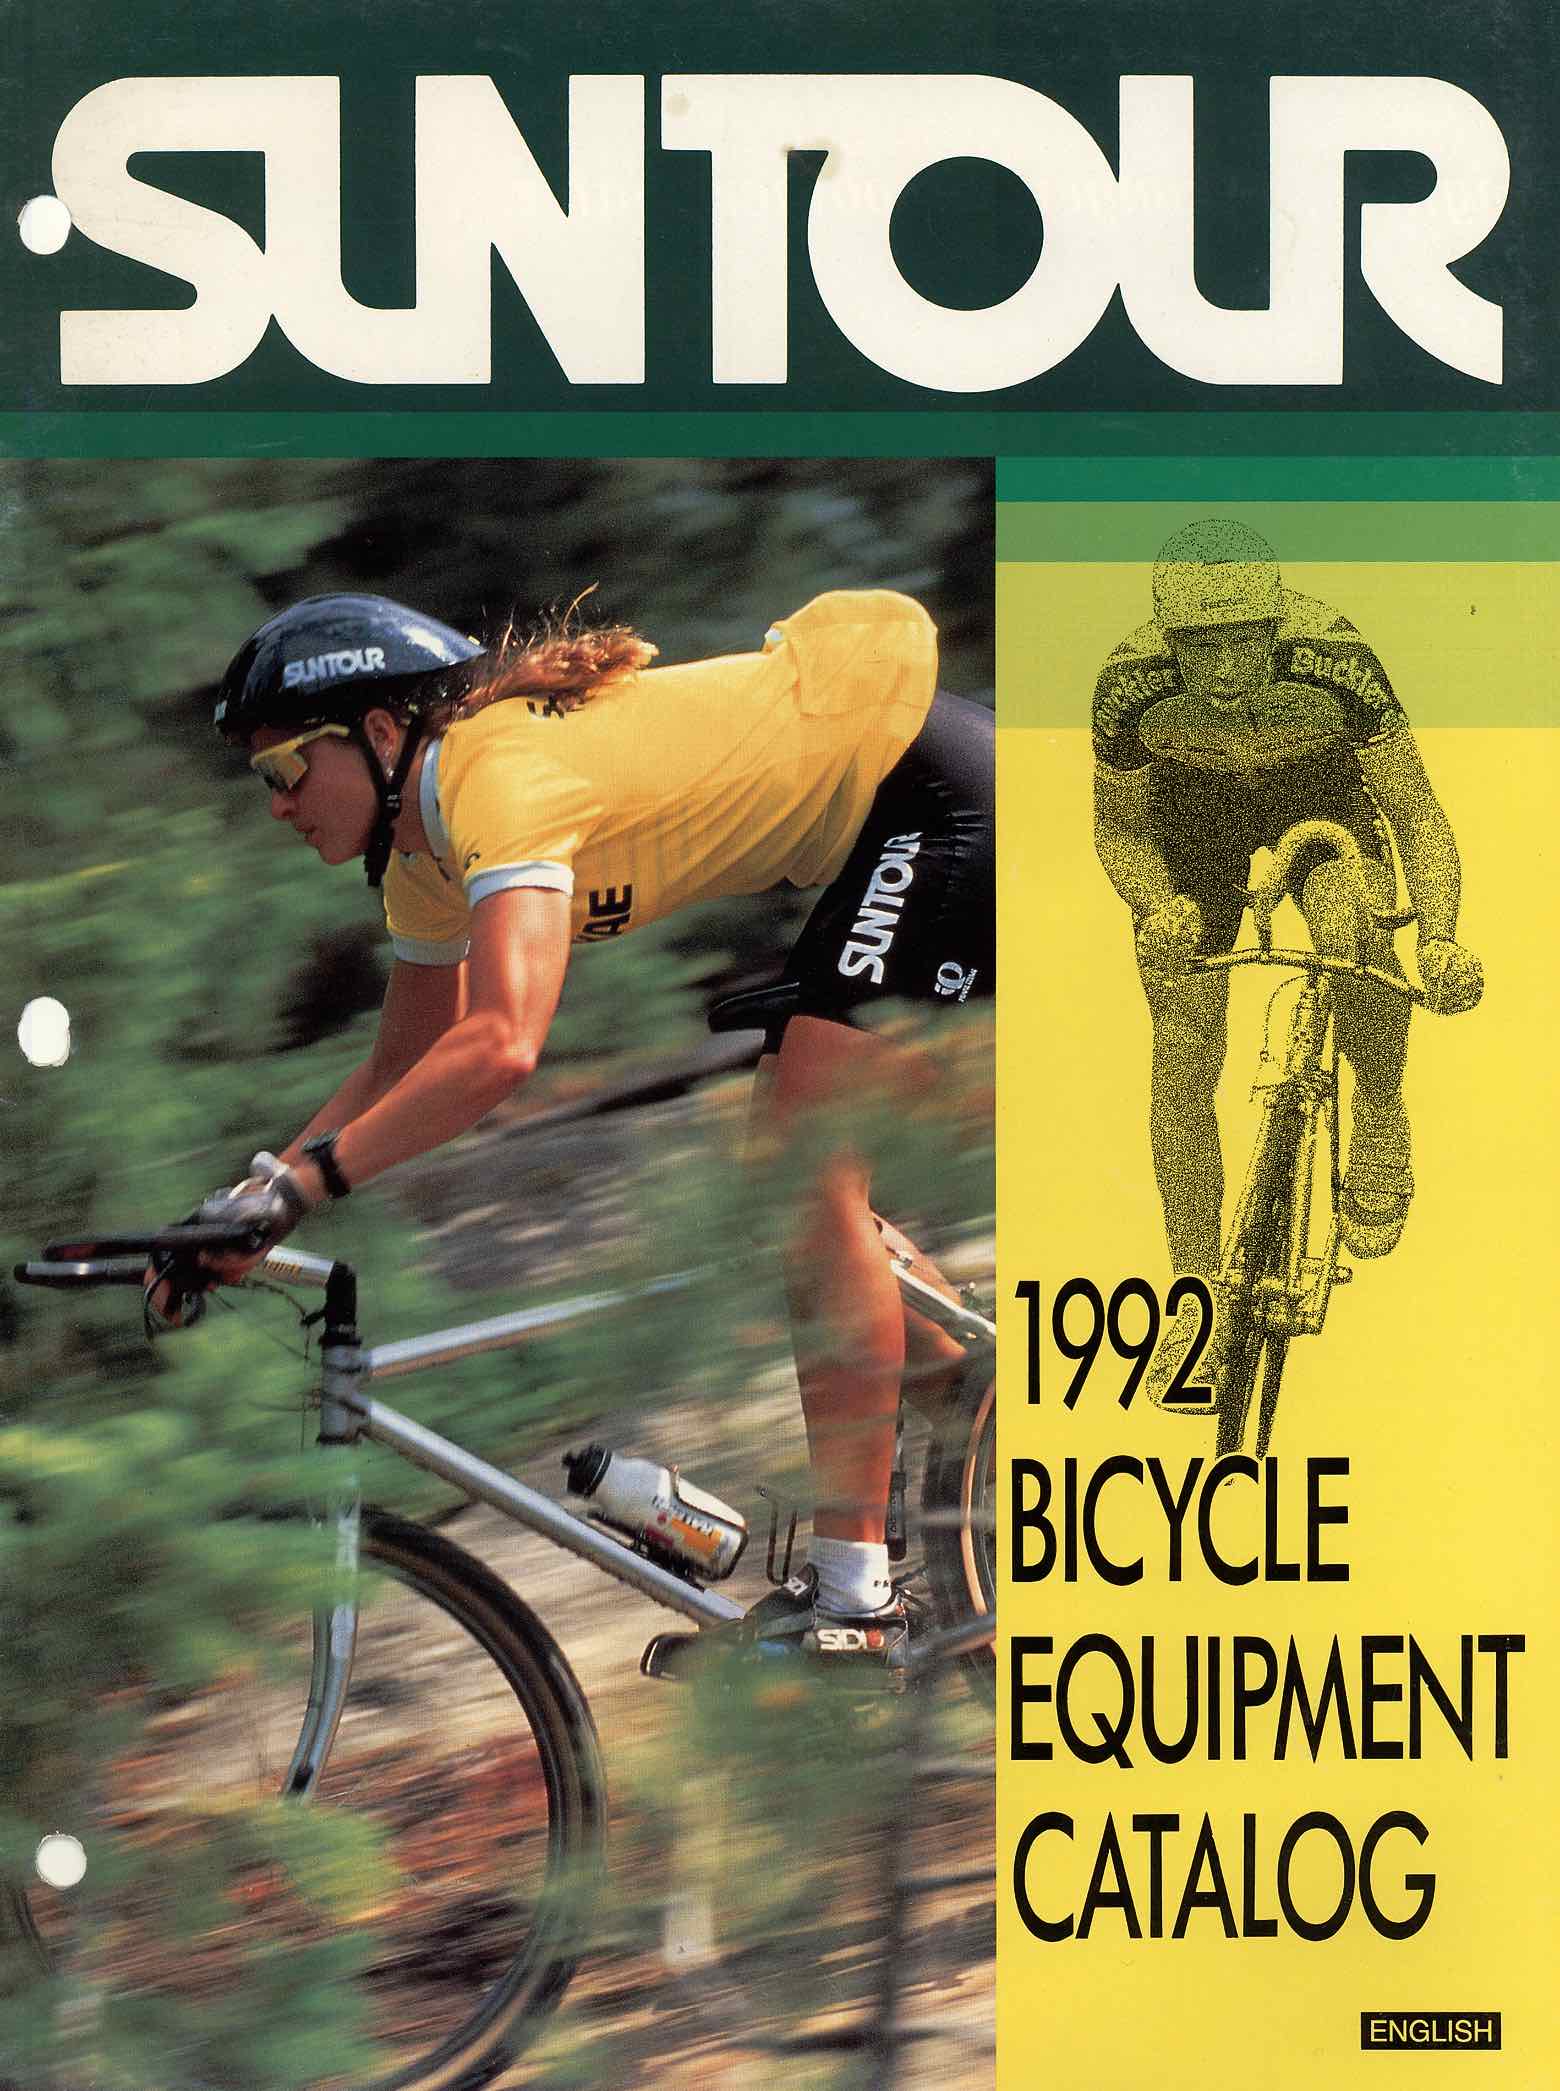 SunTour Bicycle Equipment Catalog 1992 - Front cover main image